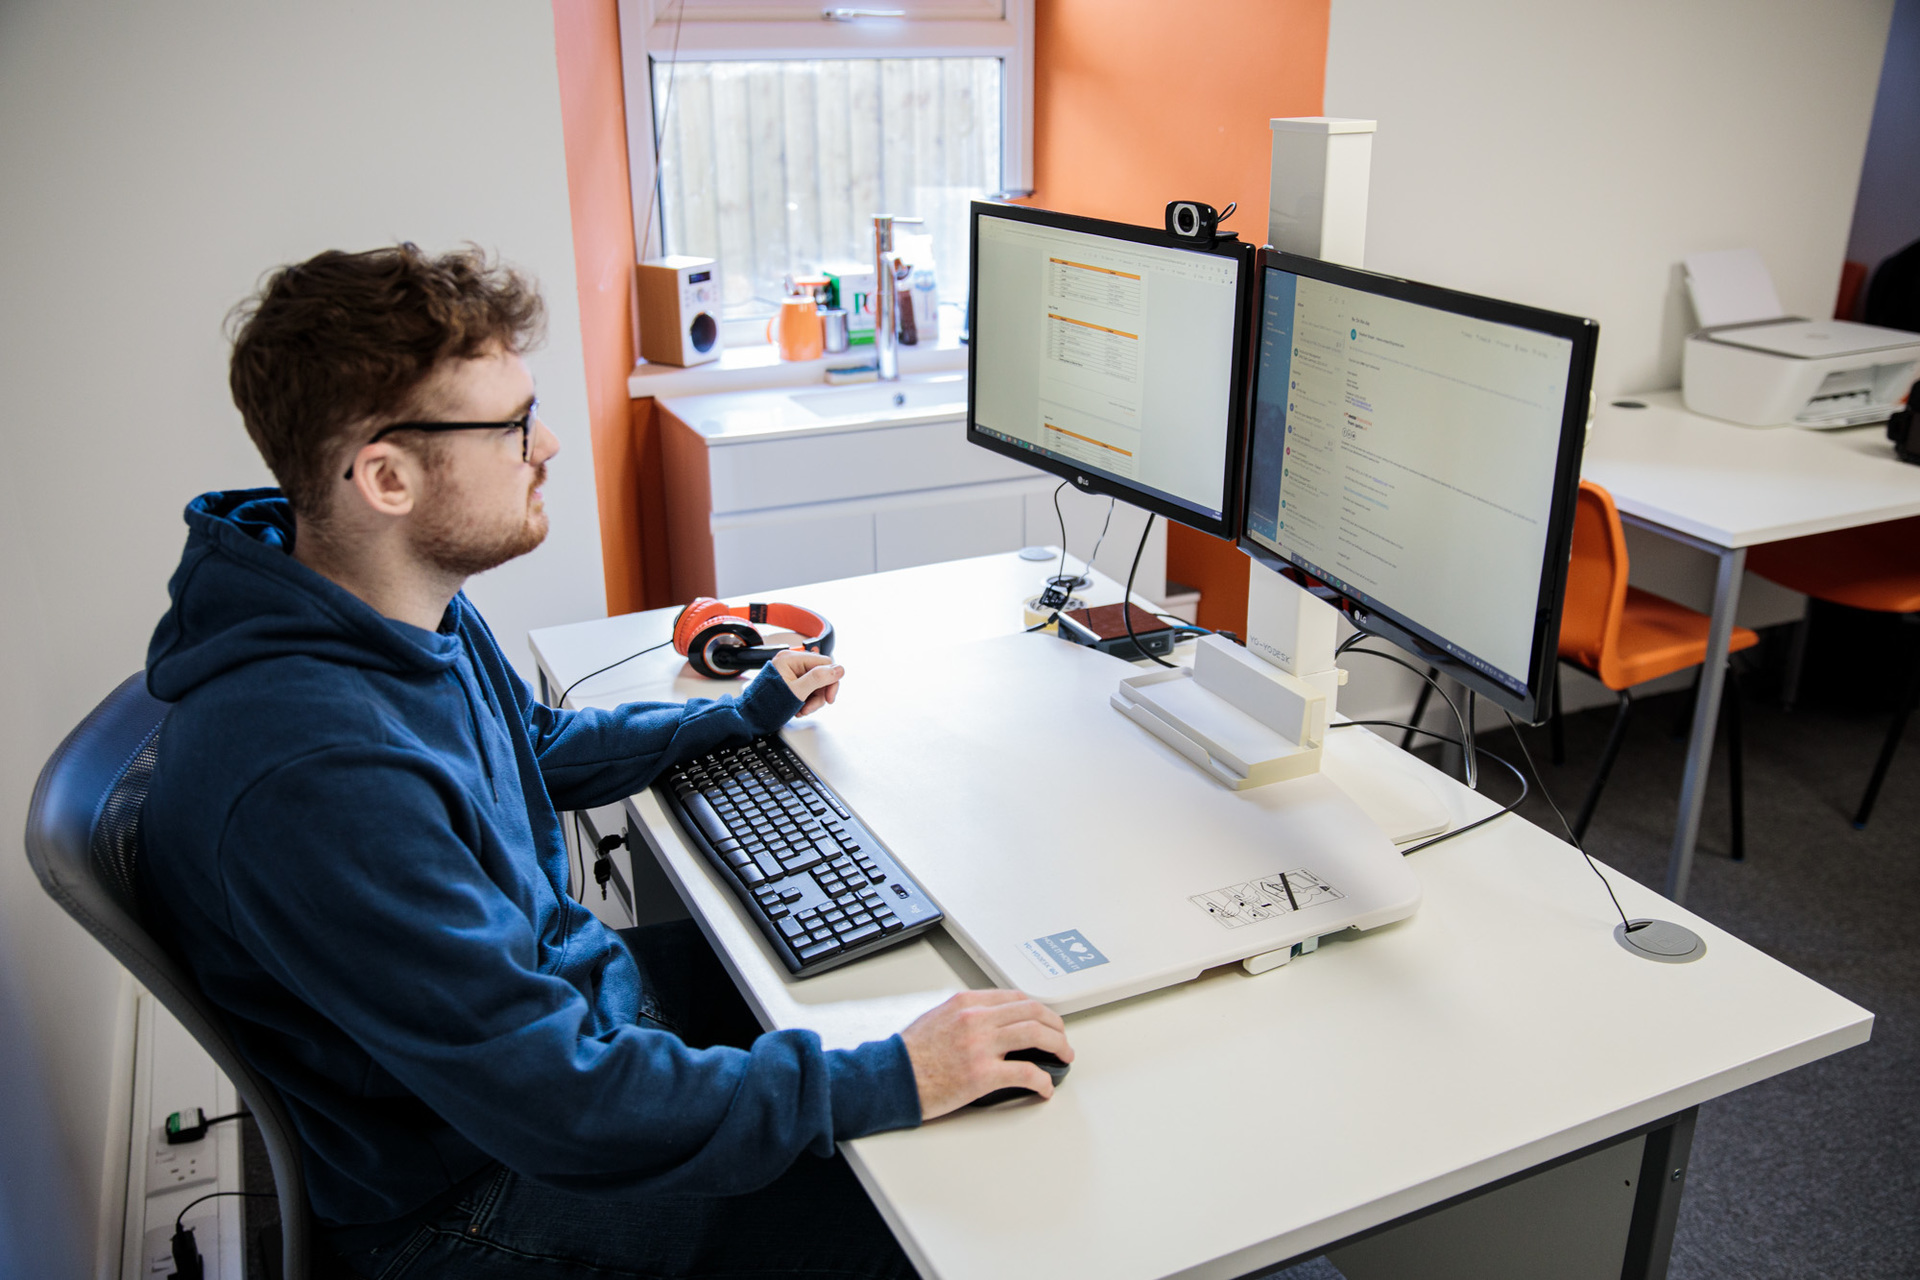 A man sat at his desk concentrating on his desktop computer